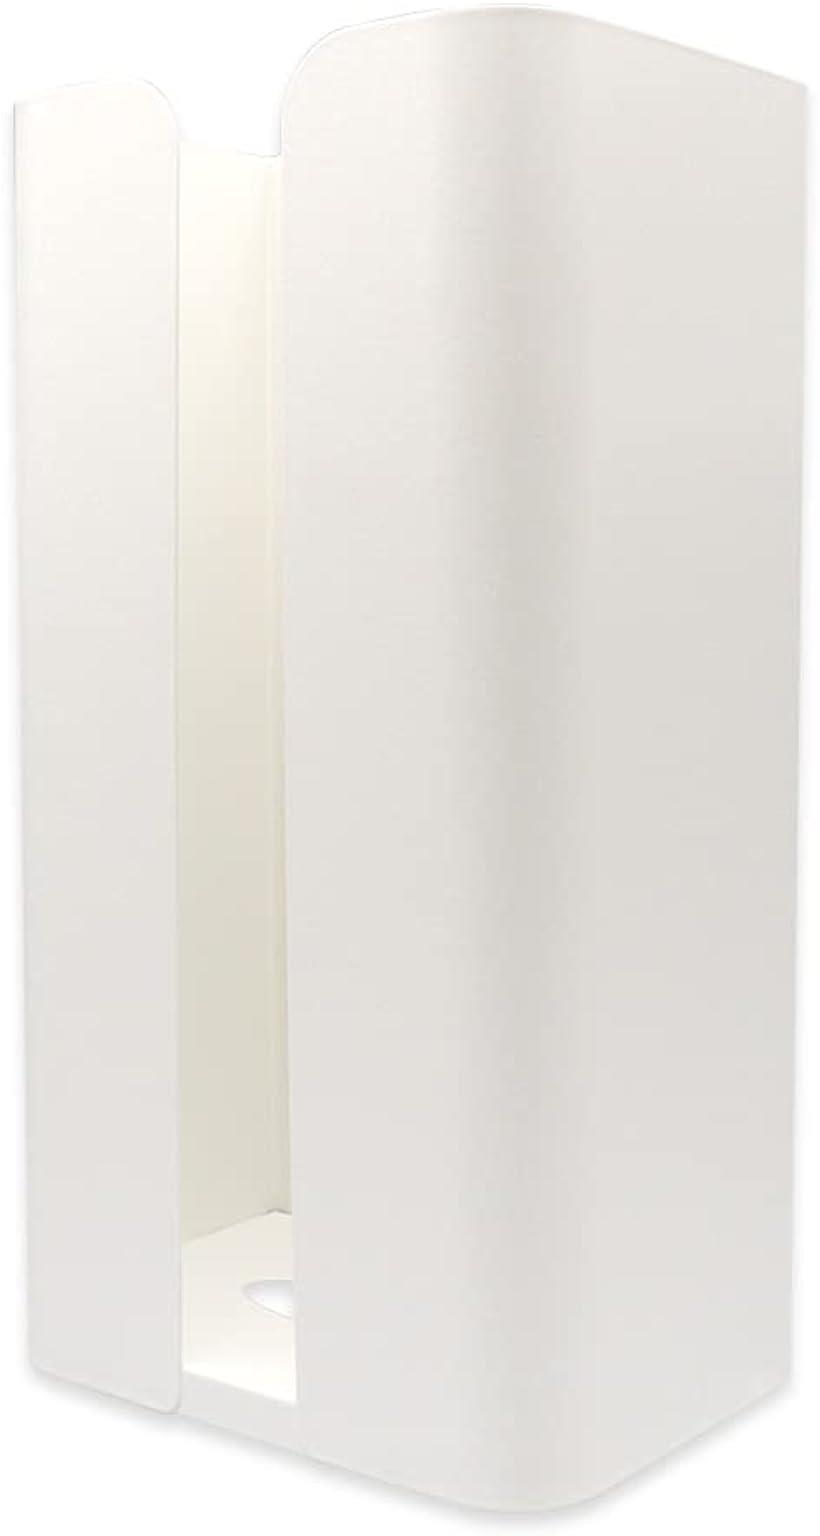 Esom マグネットティッシュケース 磁気吸着 壁掛け ゴミ袋 冷蔵庫 オーブン 金属面対応 ホワイト 